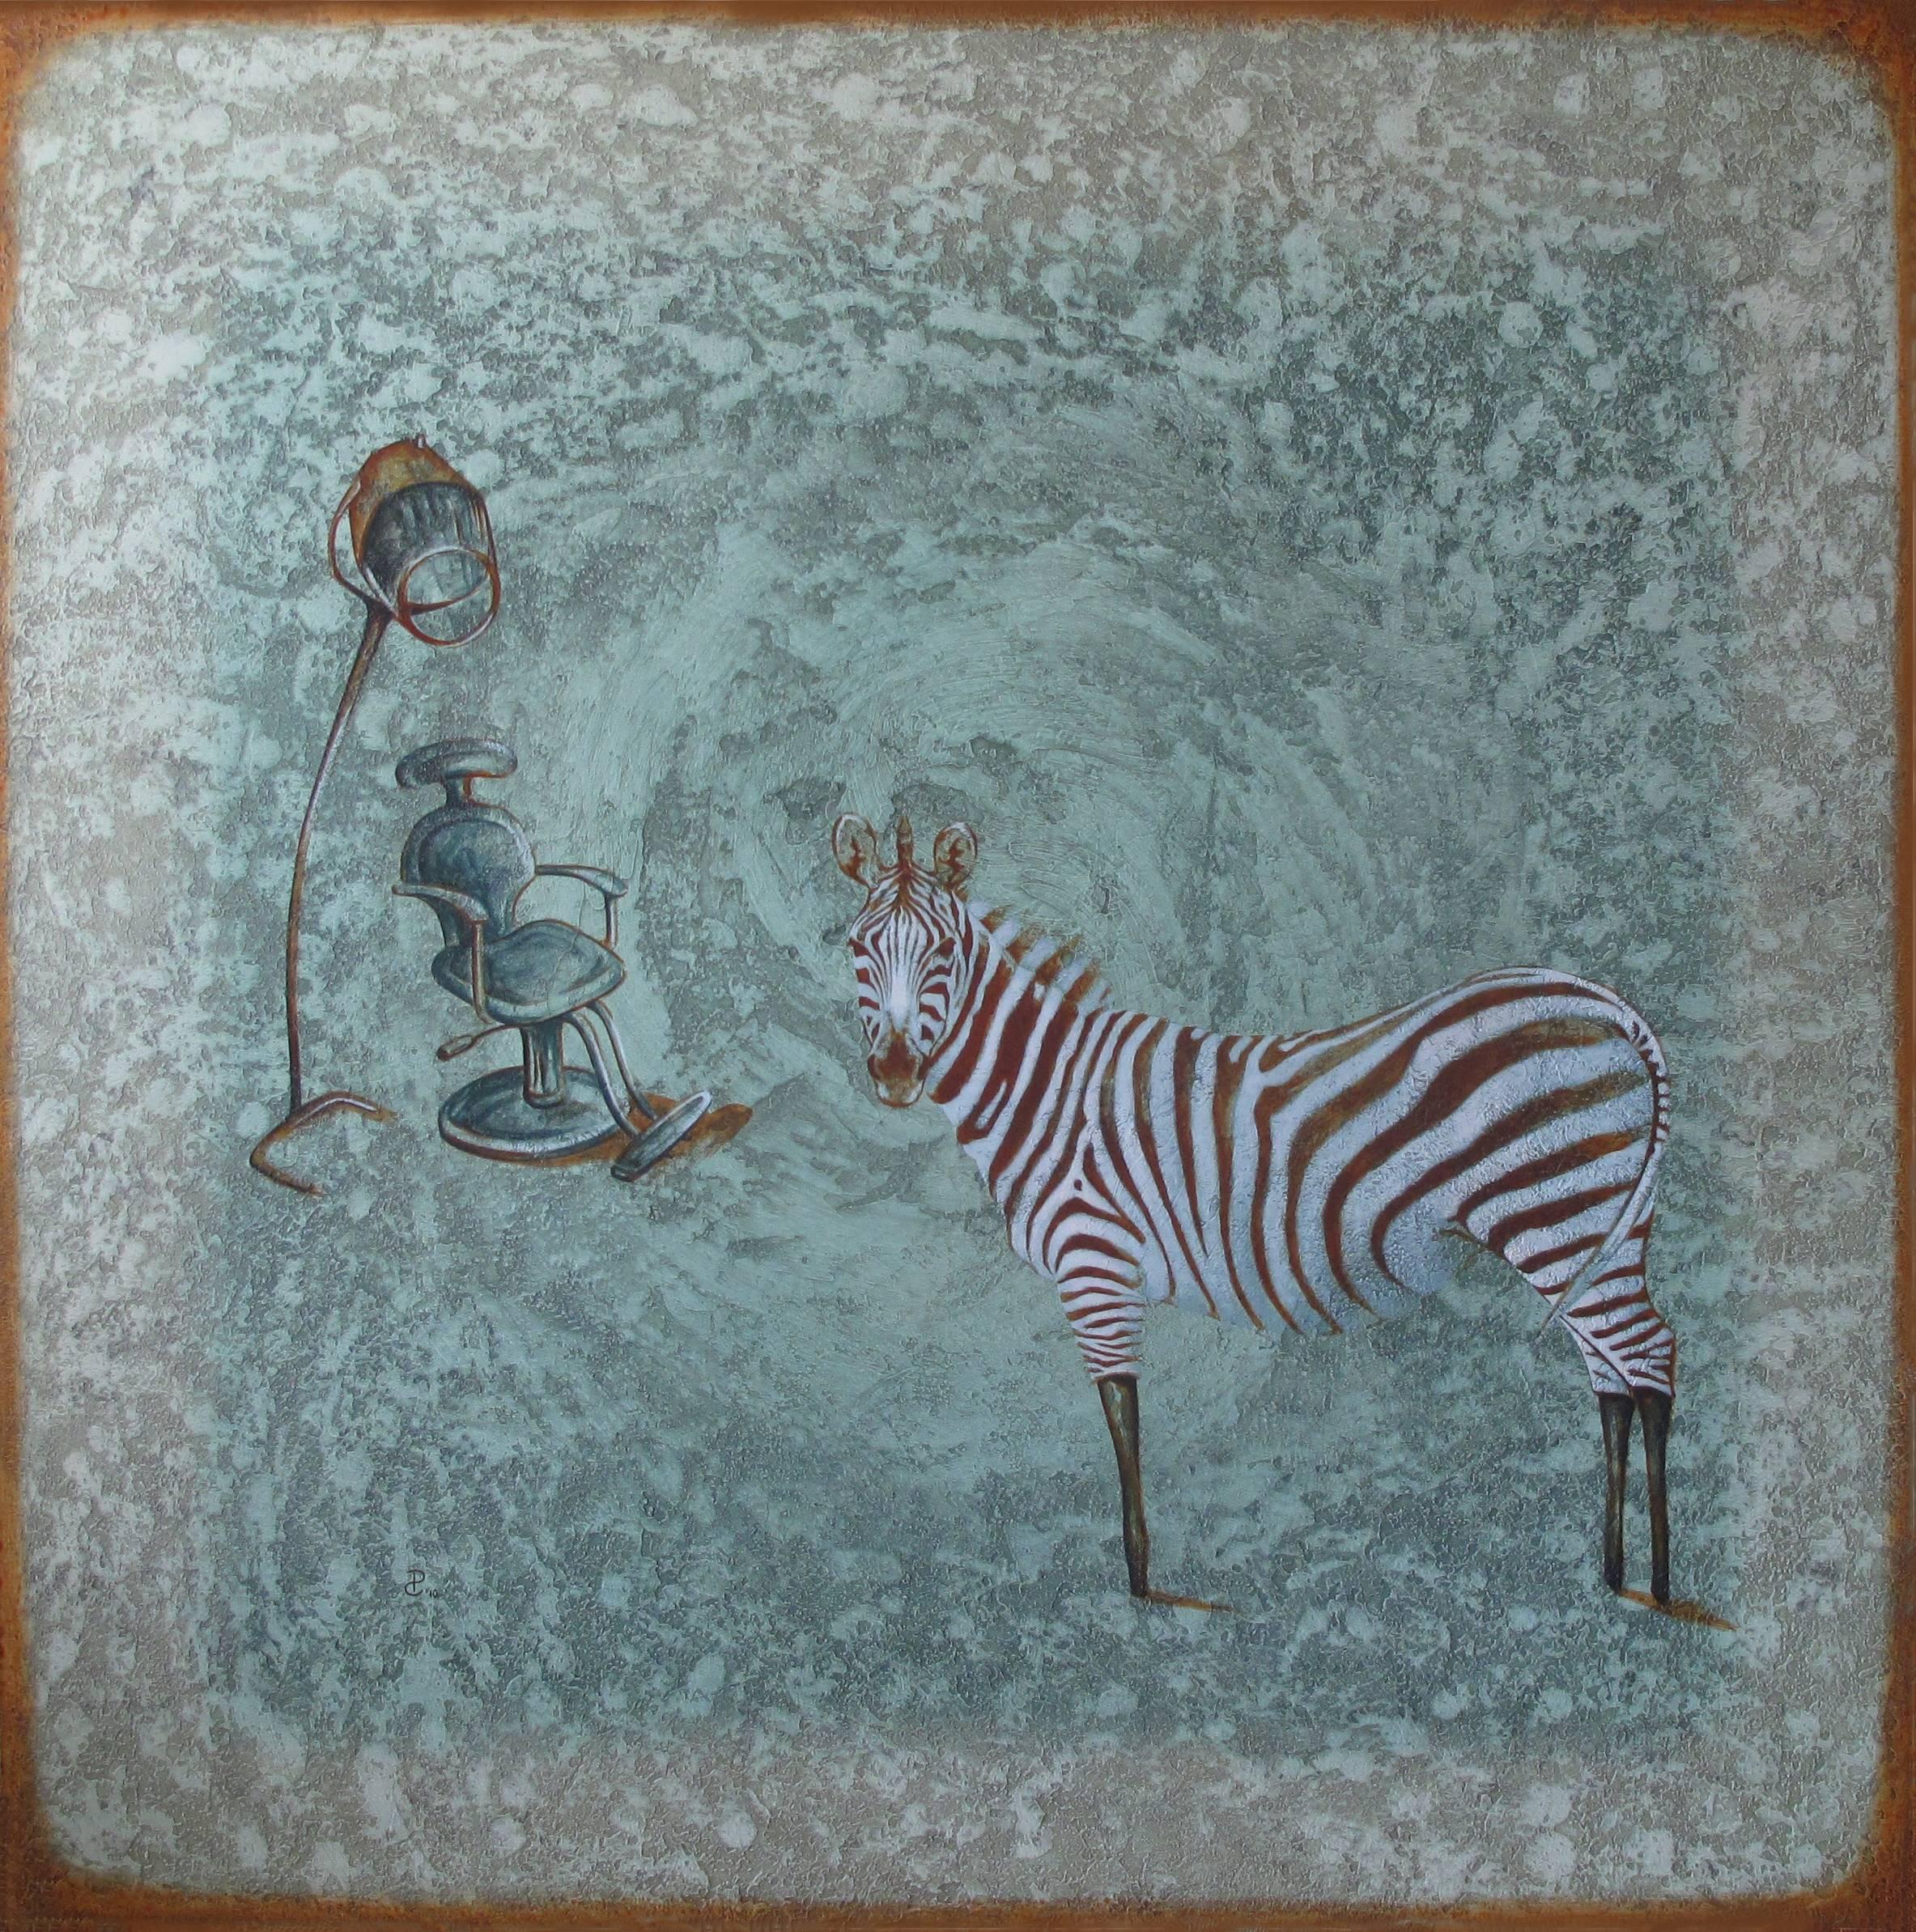 Pablo Caviedes Figurative Painting - "Beauty Deal" - Zebra painting, blue tones